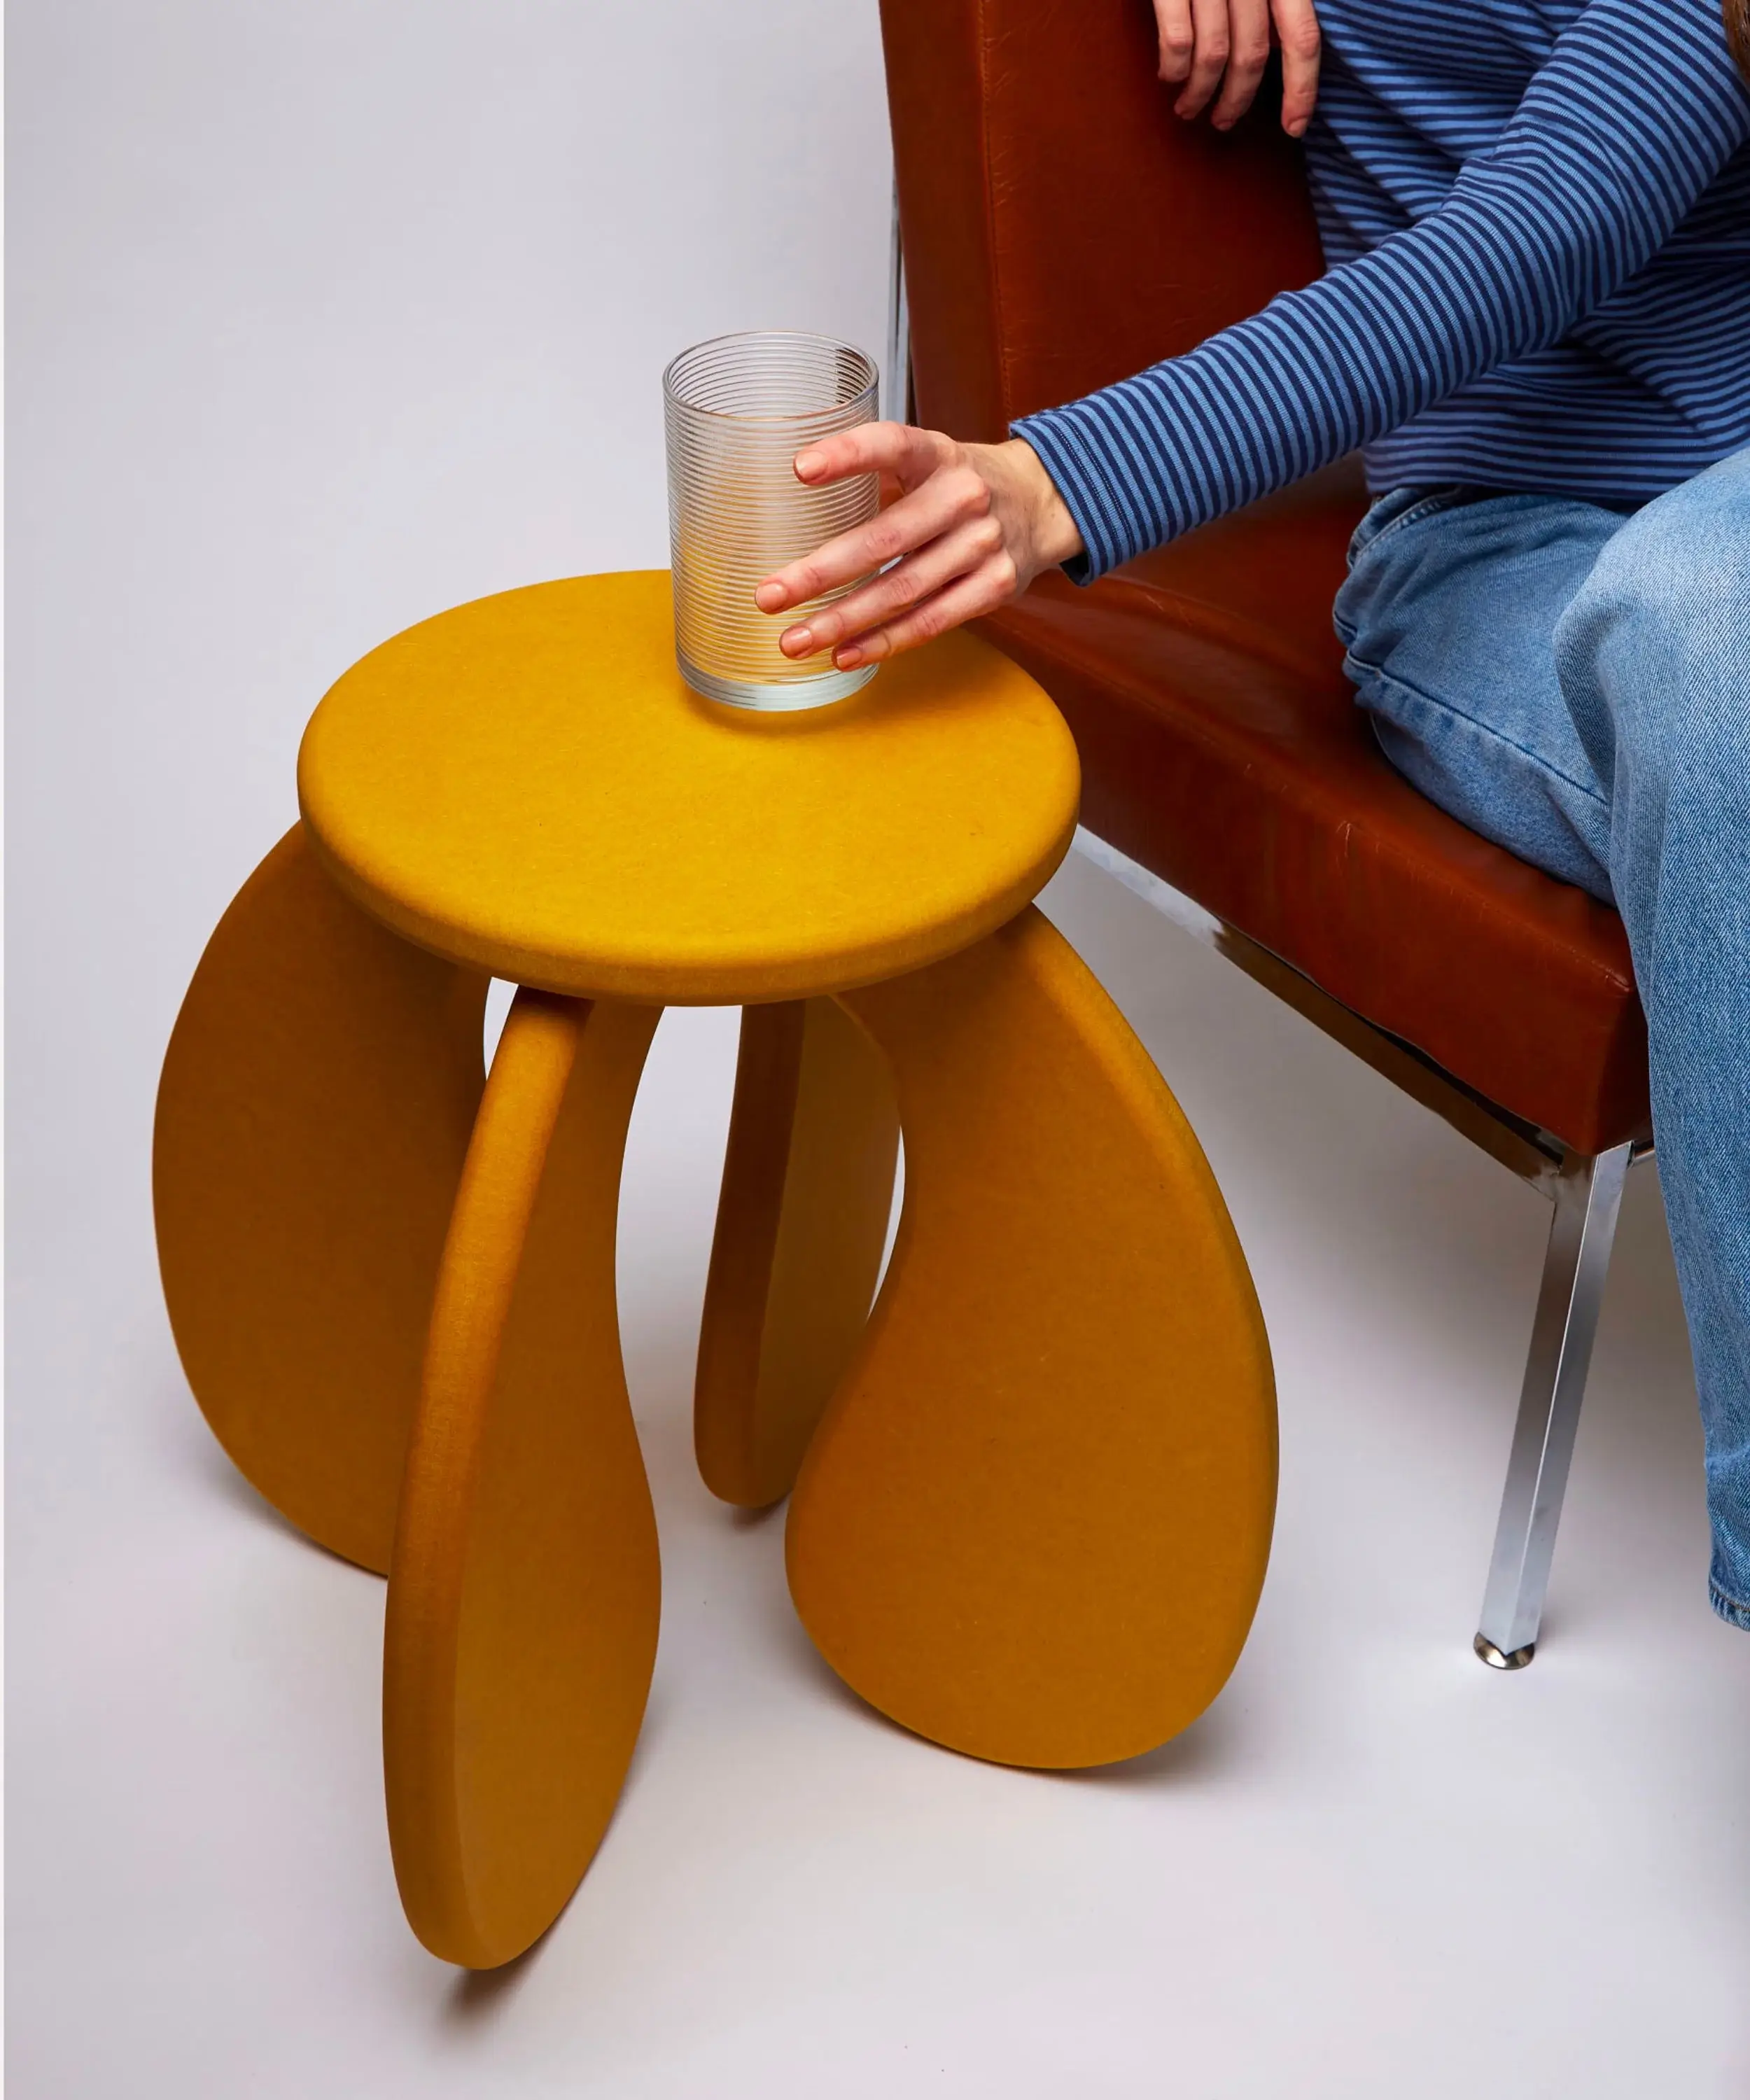 Glassette Furniture  Unique Tables, Chairs & Stools - Glassette